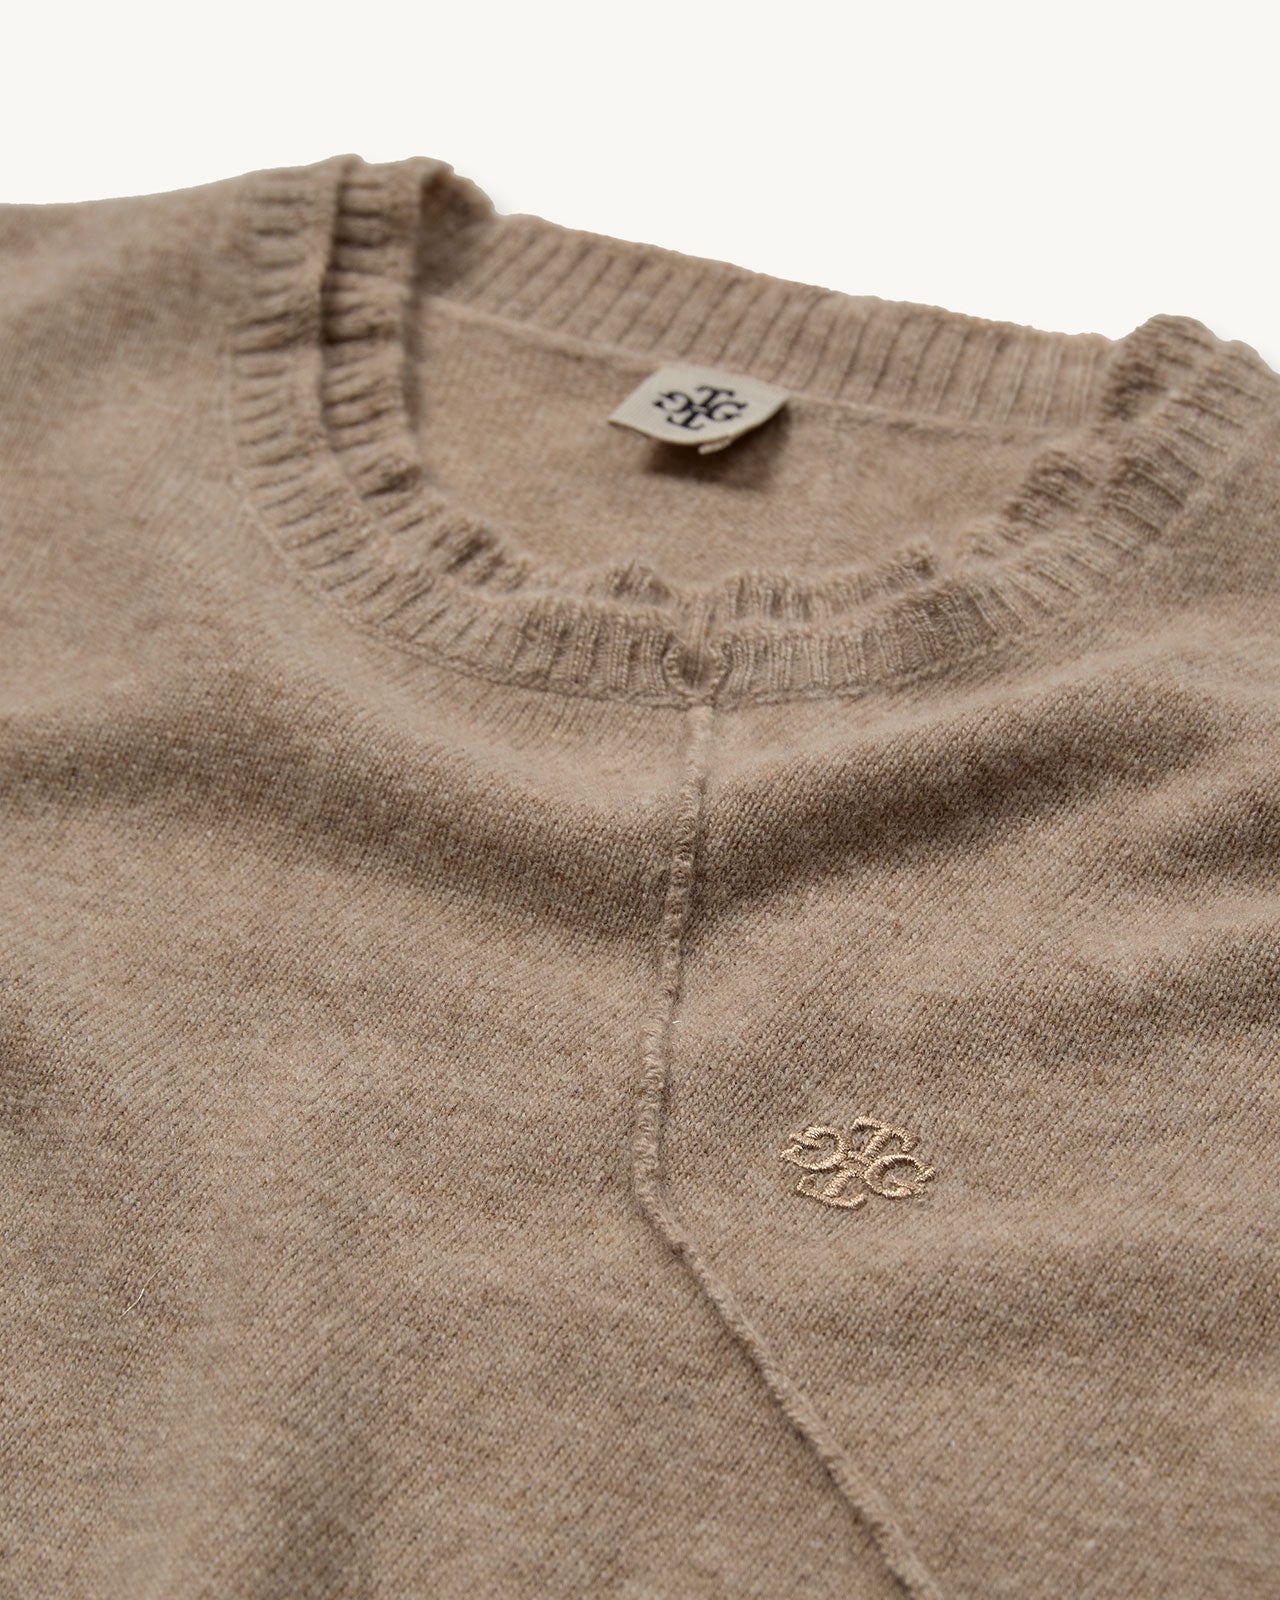 The Garment Como Neck Sweater